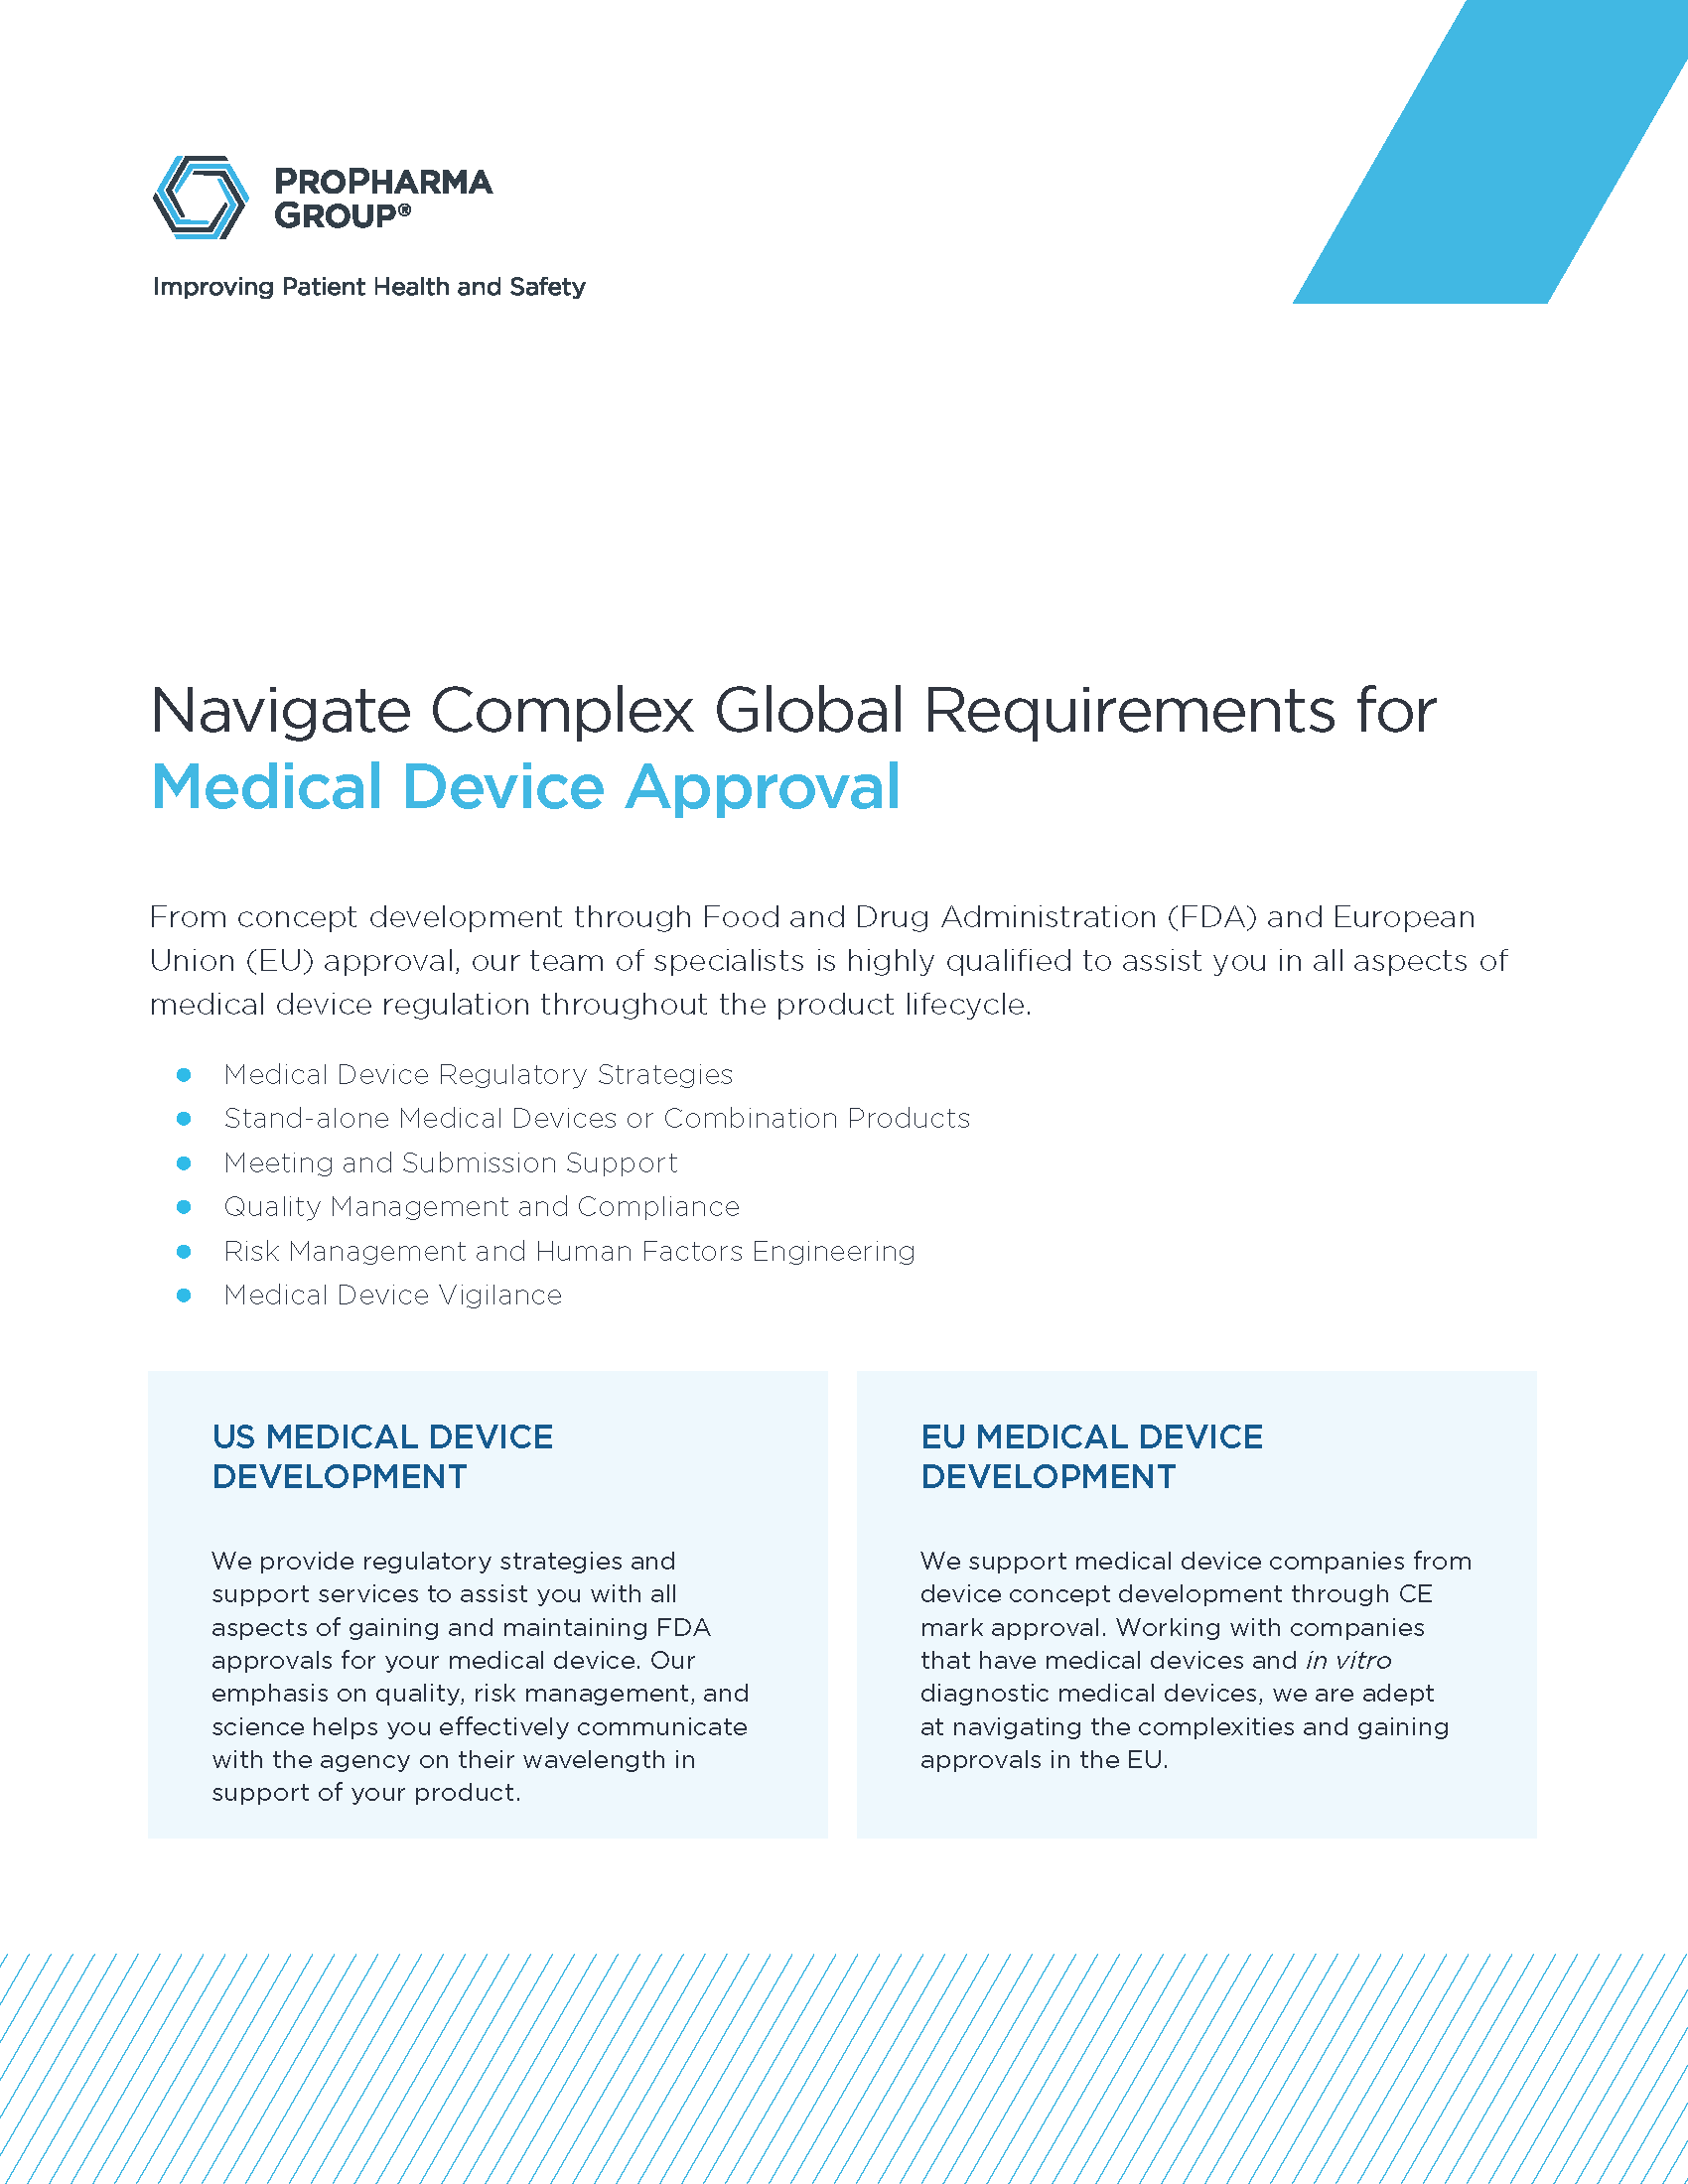 Medical Device Development